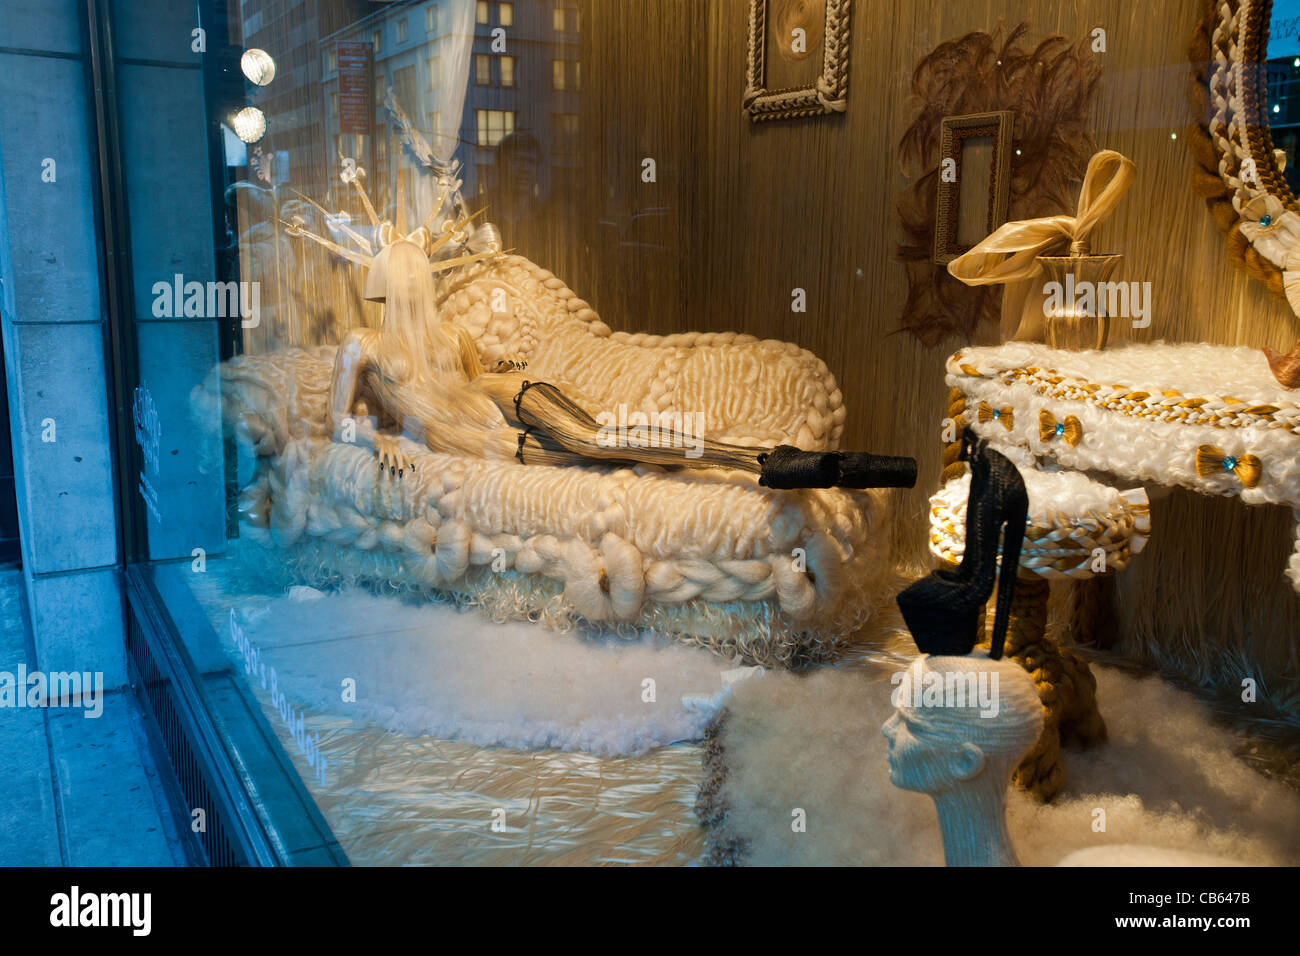 The Barney's Christmas window display, Gaga's Workshop featuring Lady Gaga on Madison Avenue in New York Stock Photo